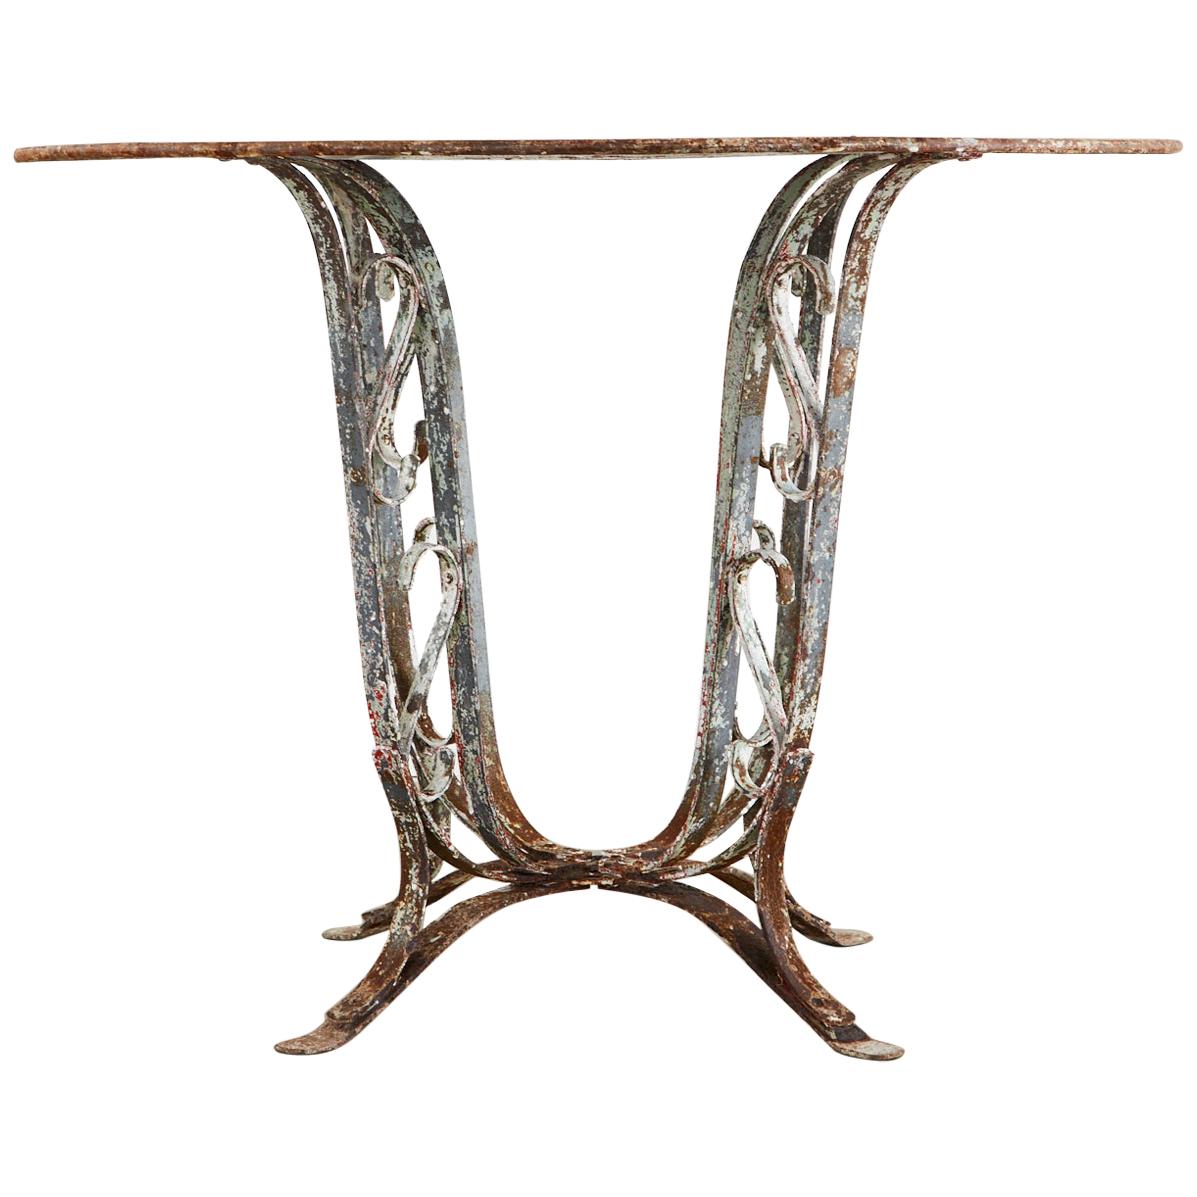 French Art Nouveau Round Iron Tulip Garden Dining Table